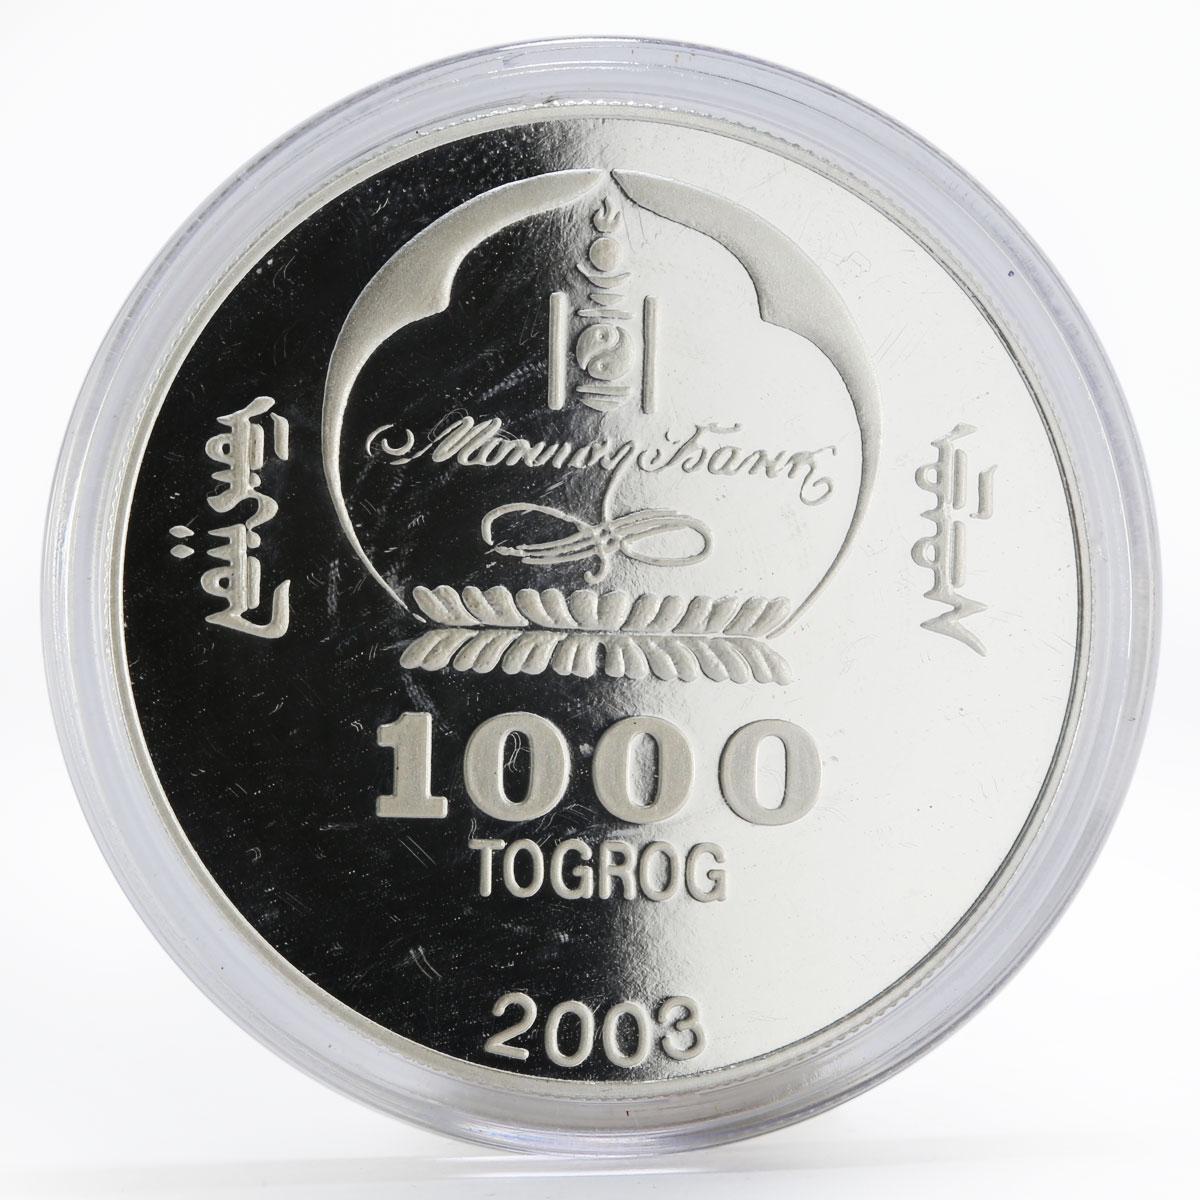 Mongolia 1000 togrog History of Asia Attila the Hun proof silver coin 2003